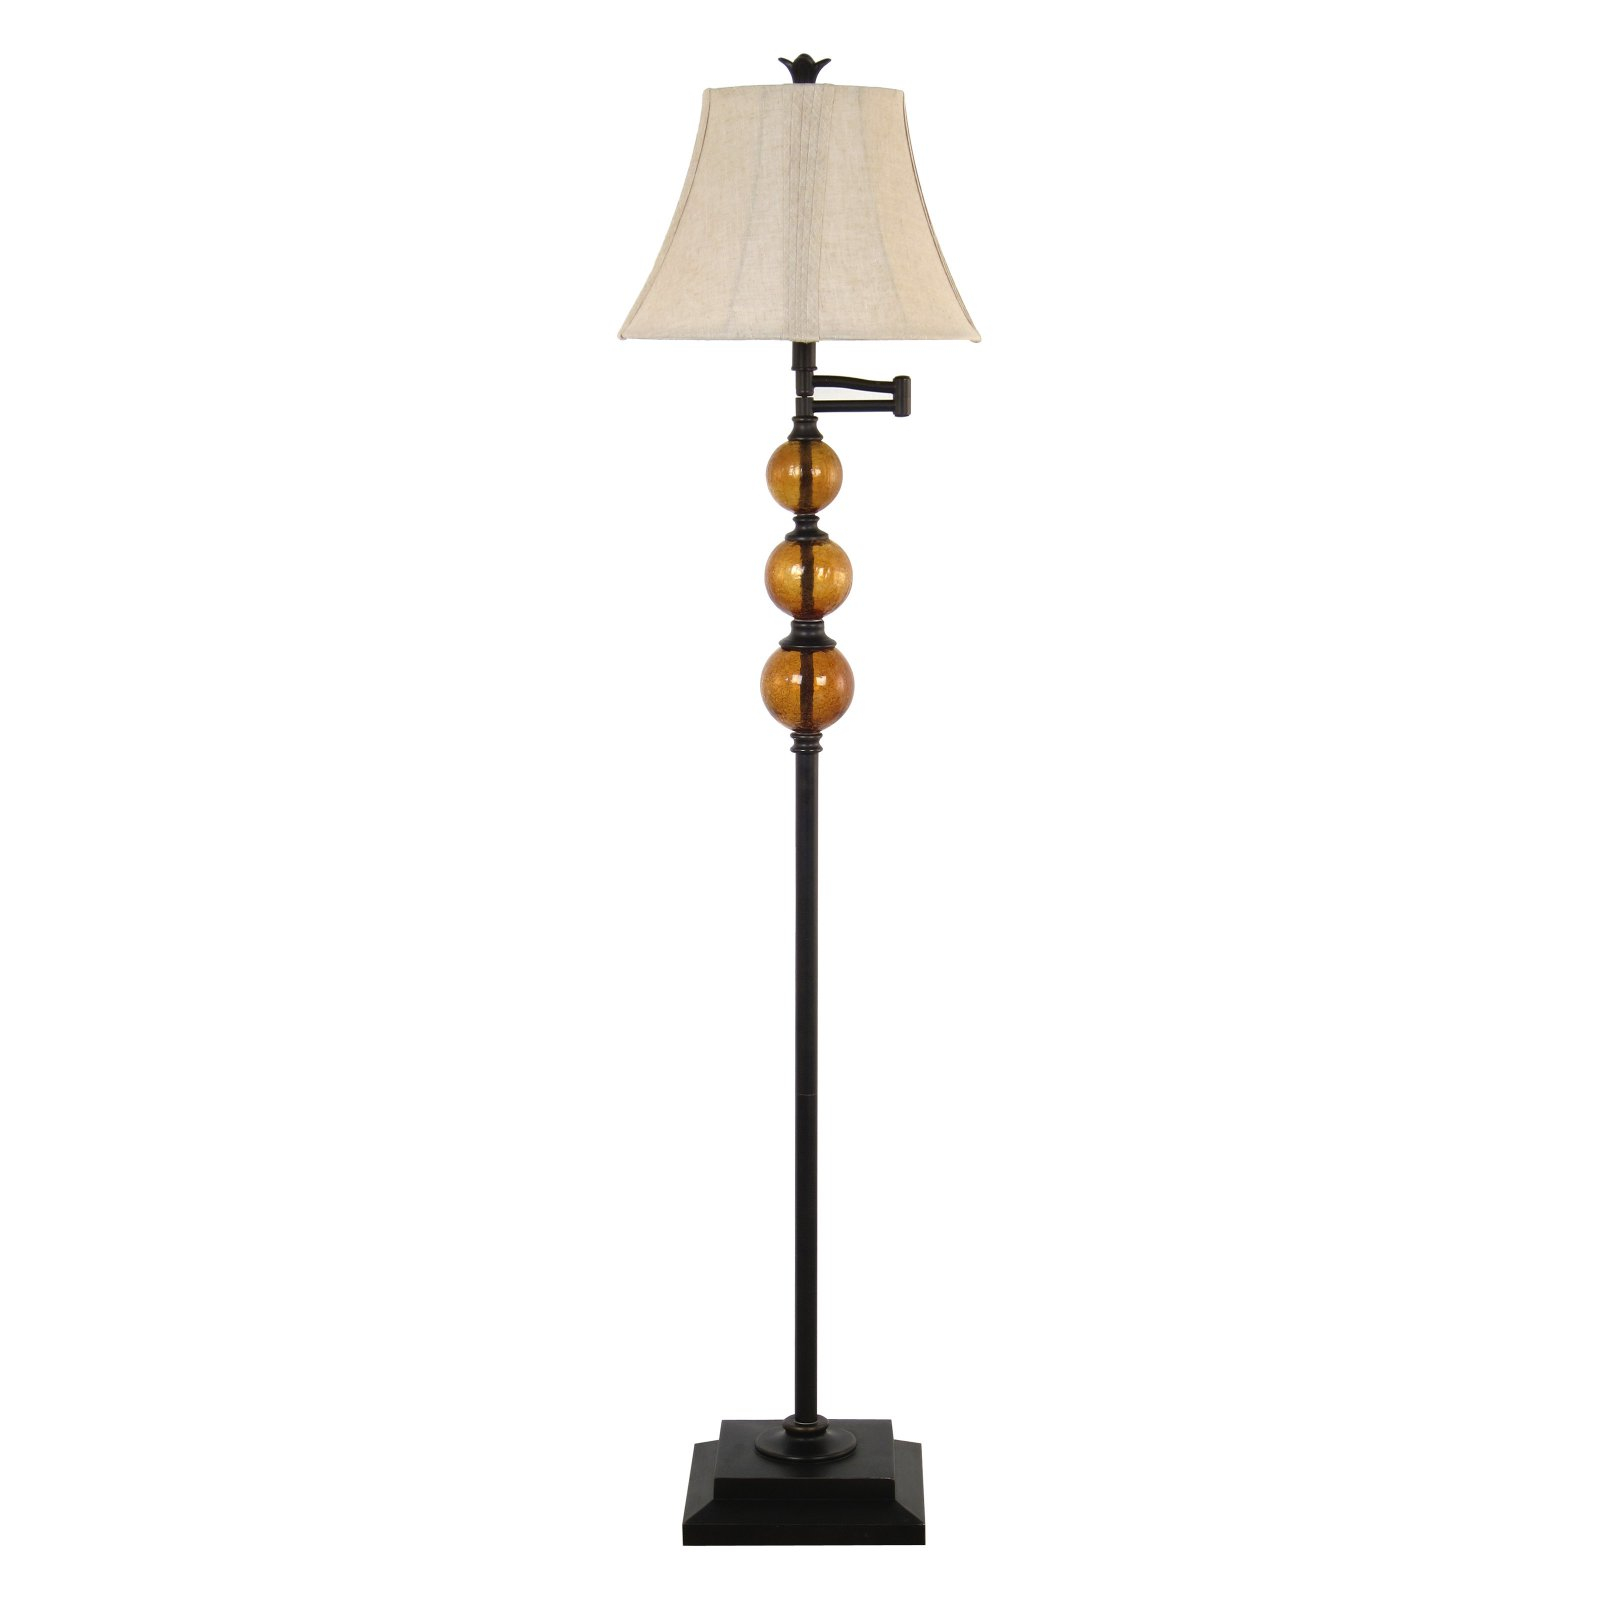 Urban Style Living 53 Lf2010 Swingarm Floor Lamp With within sizing 1600 X 1600